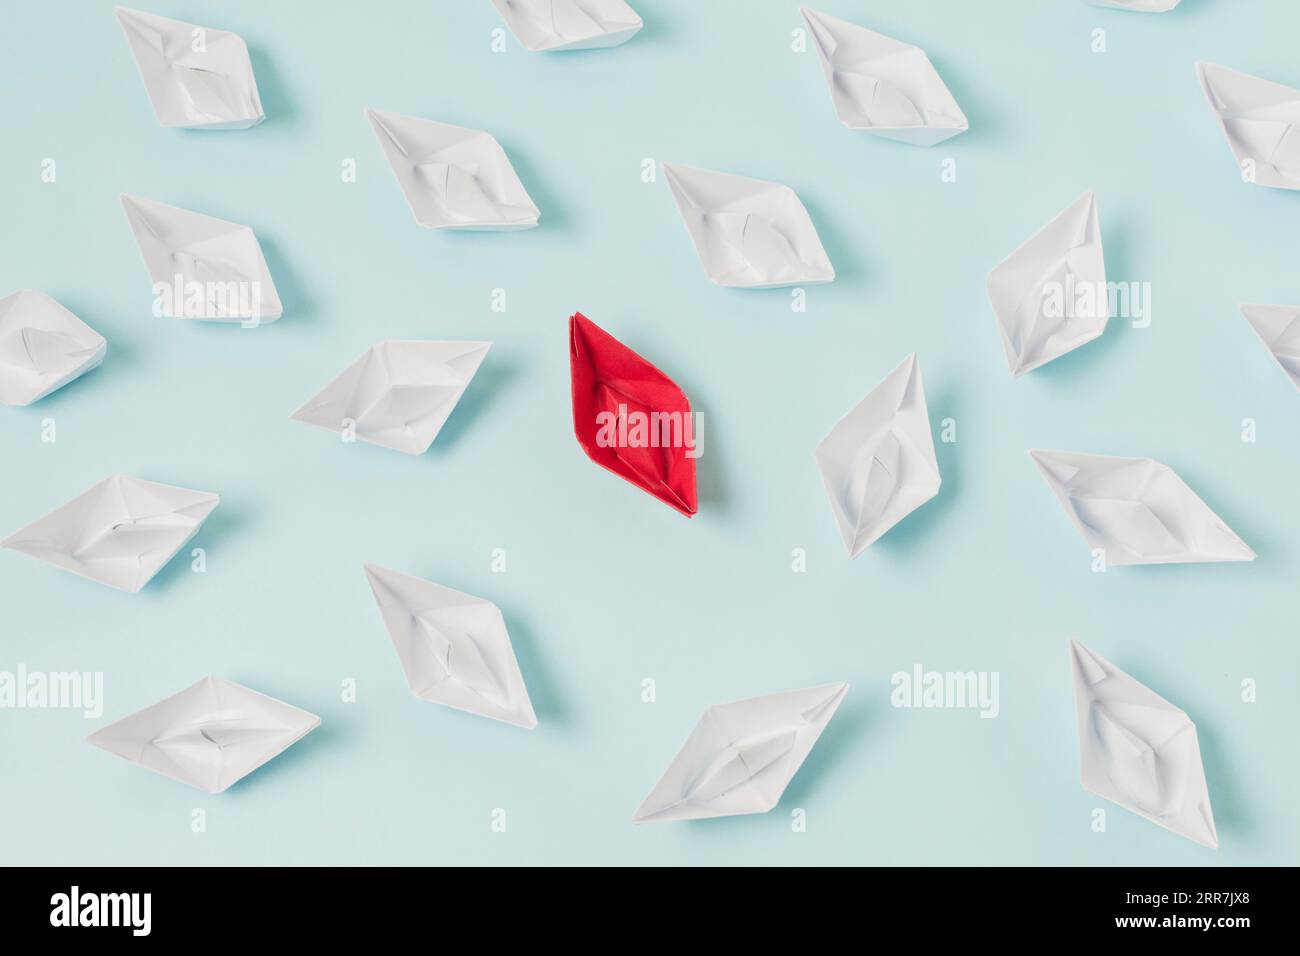 Origami boats representing leadership concept Stock Photo